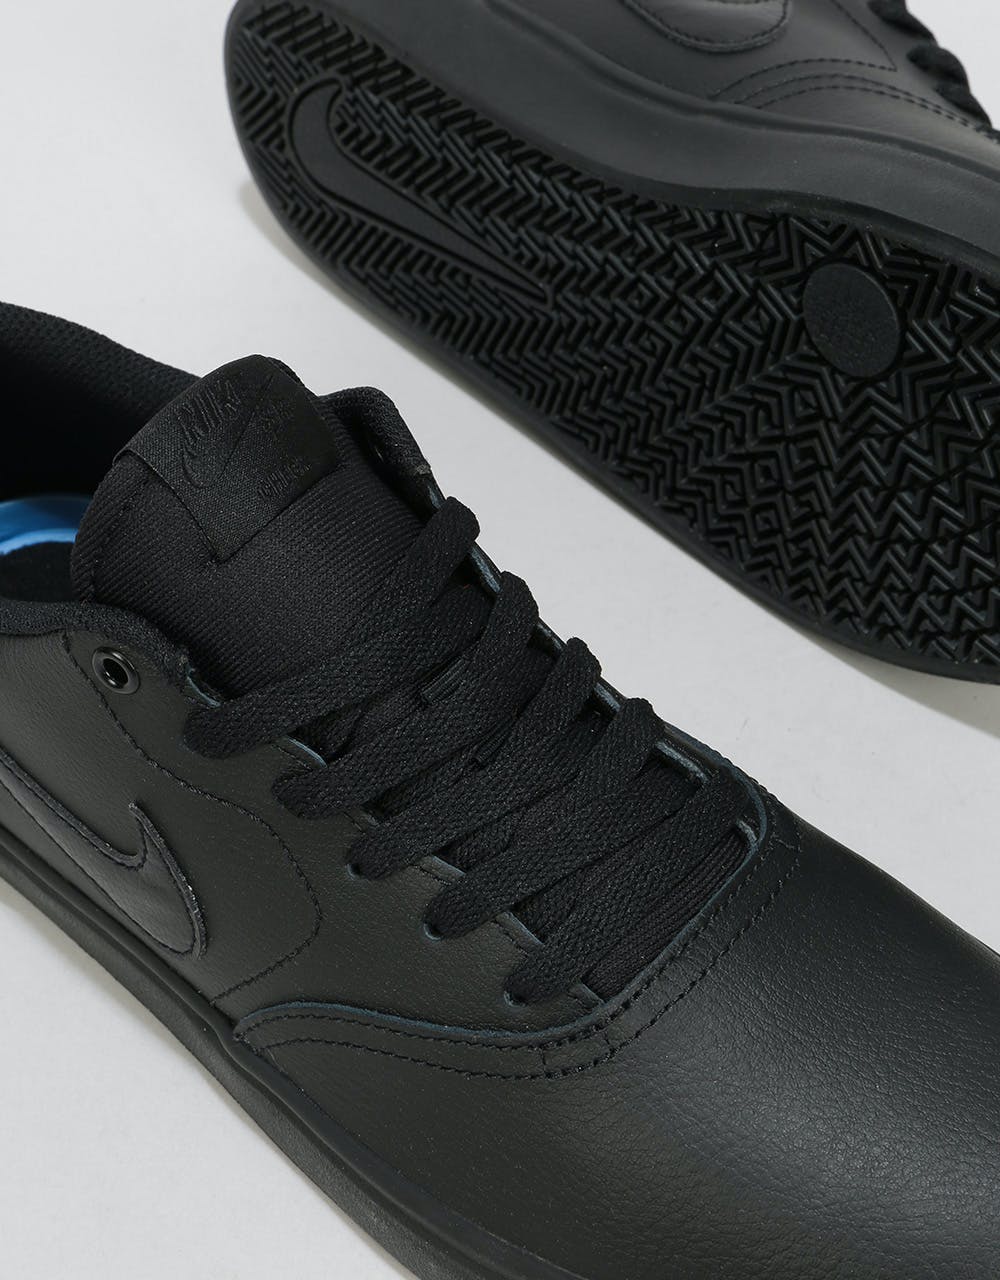 Nike SB Check Solarsoft Skate Shoes - Black/Black-Gunsmoke